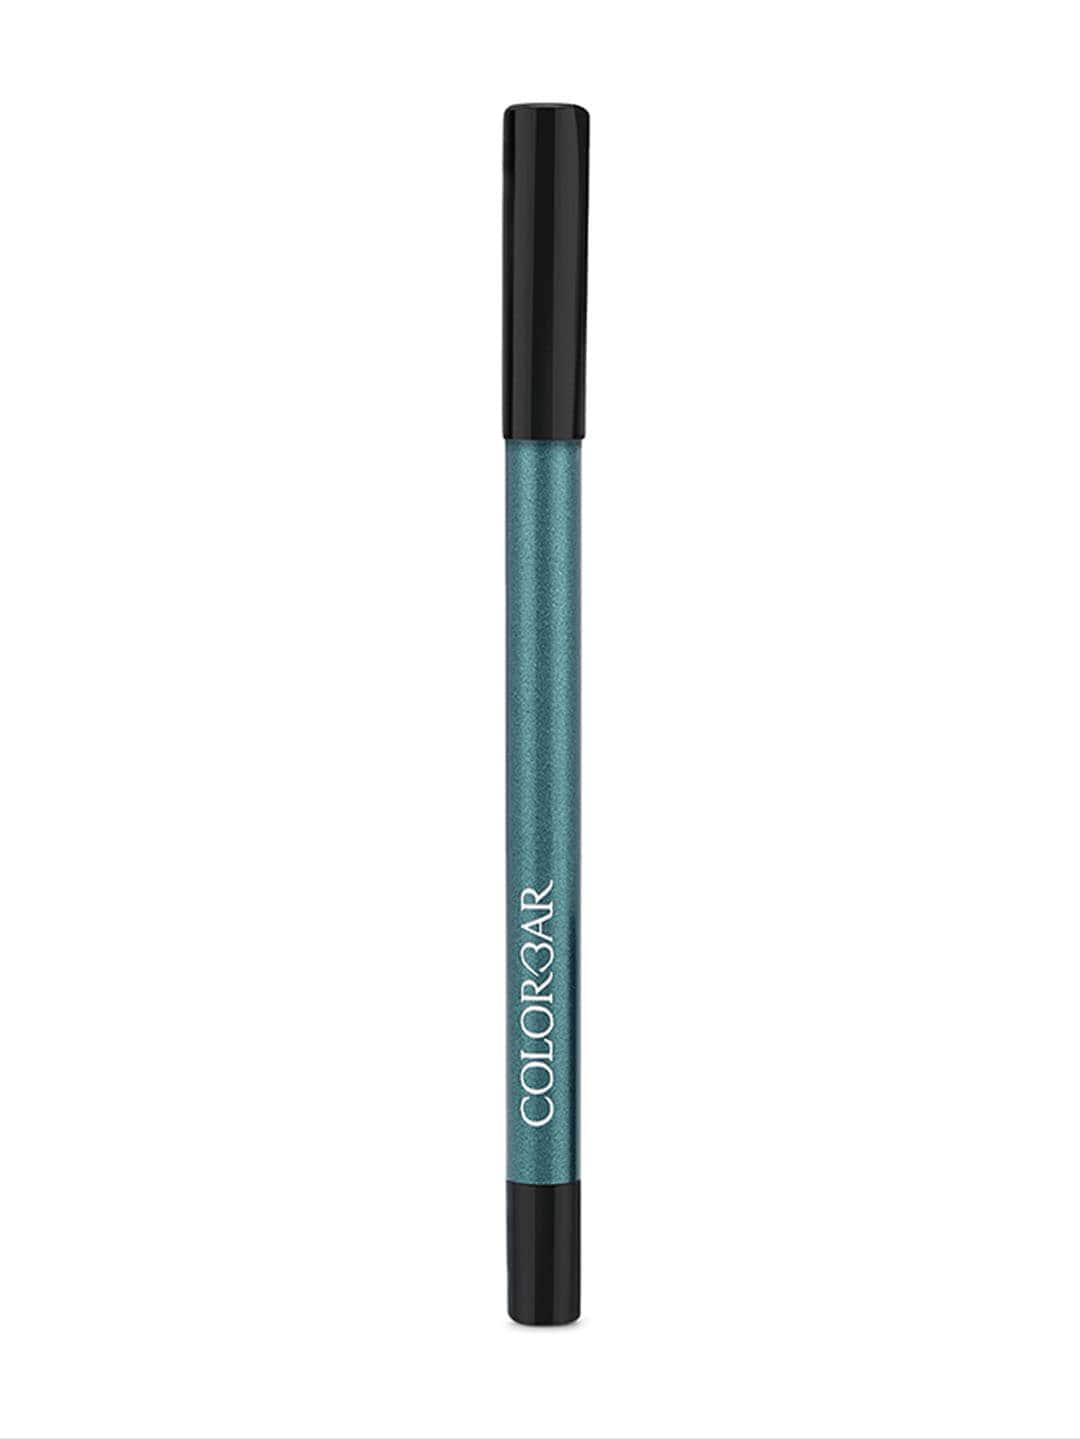 Colorbar Long-Lasting Waterproof I-Glide Eye Pencil - Peacock Throne